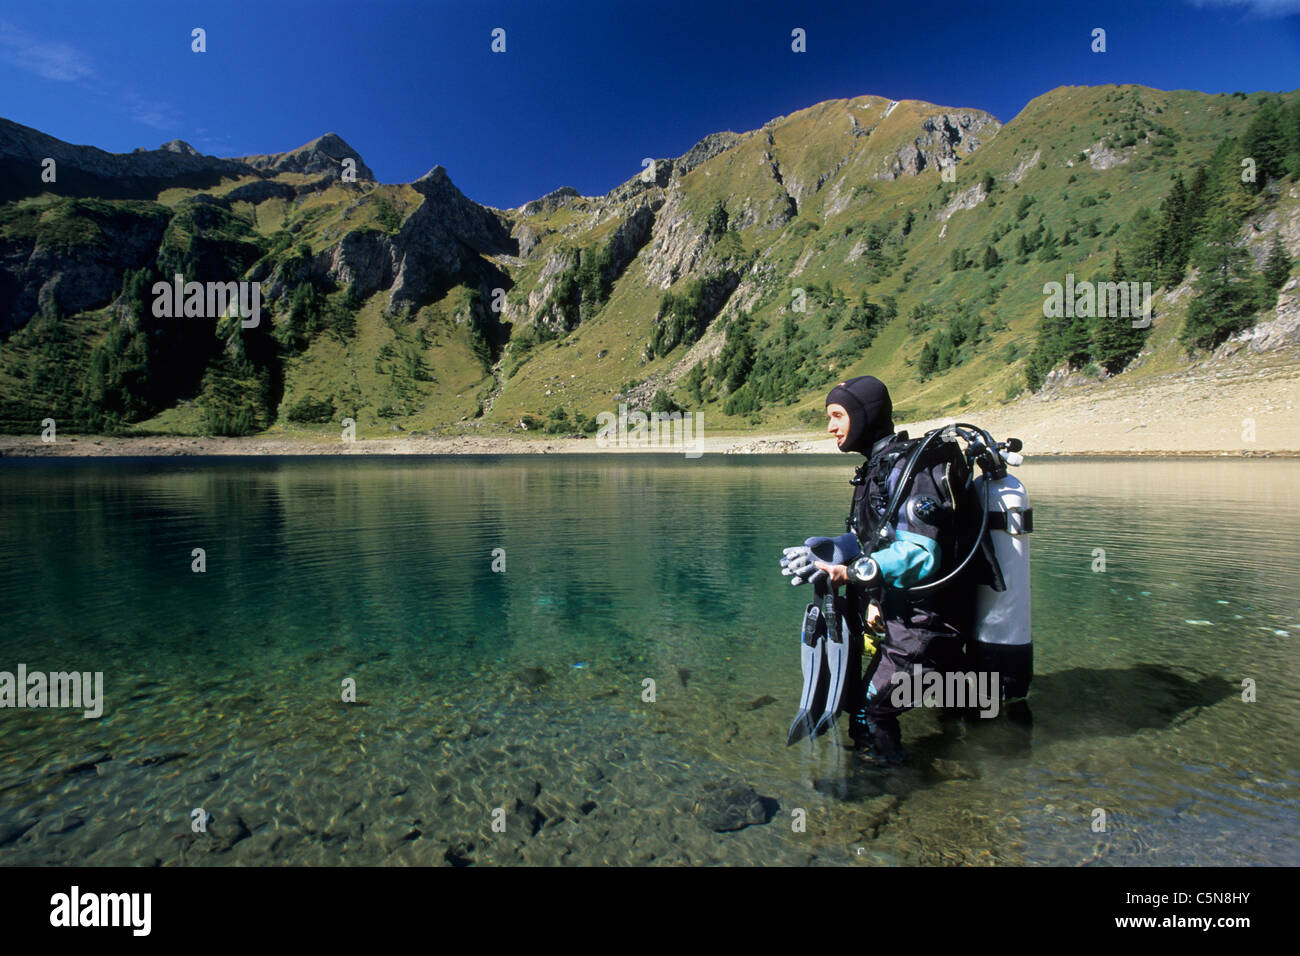 Taucher am See Tremorgio, Tessin, Schweiz Stockfoto